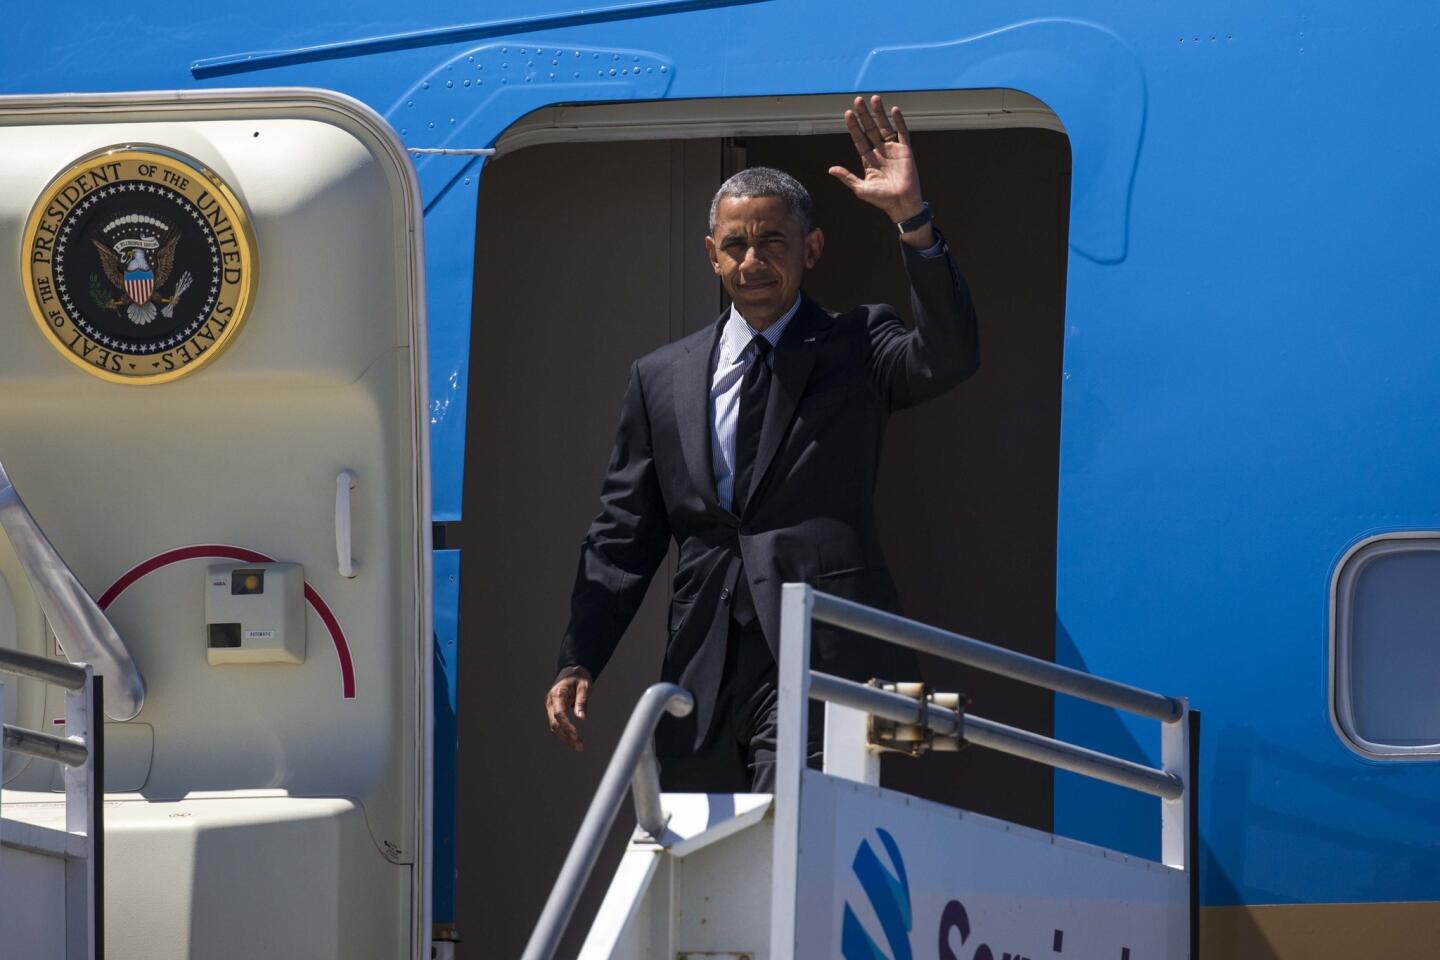 President Obama arrives in Los Angeles